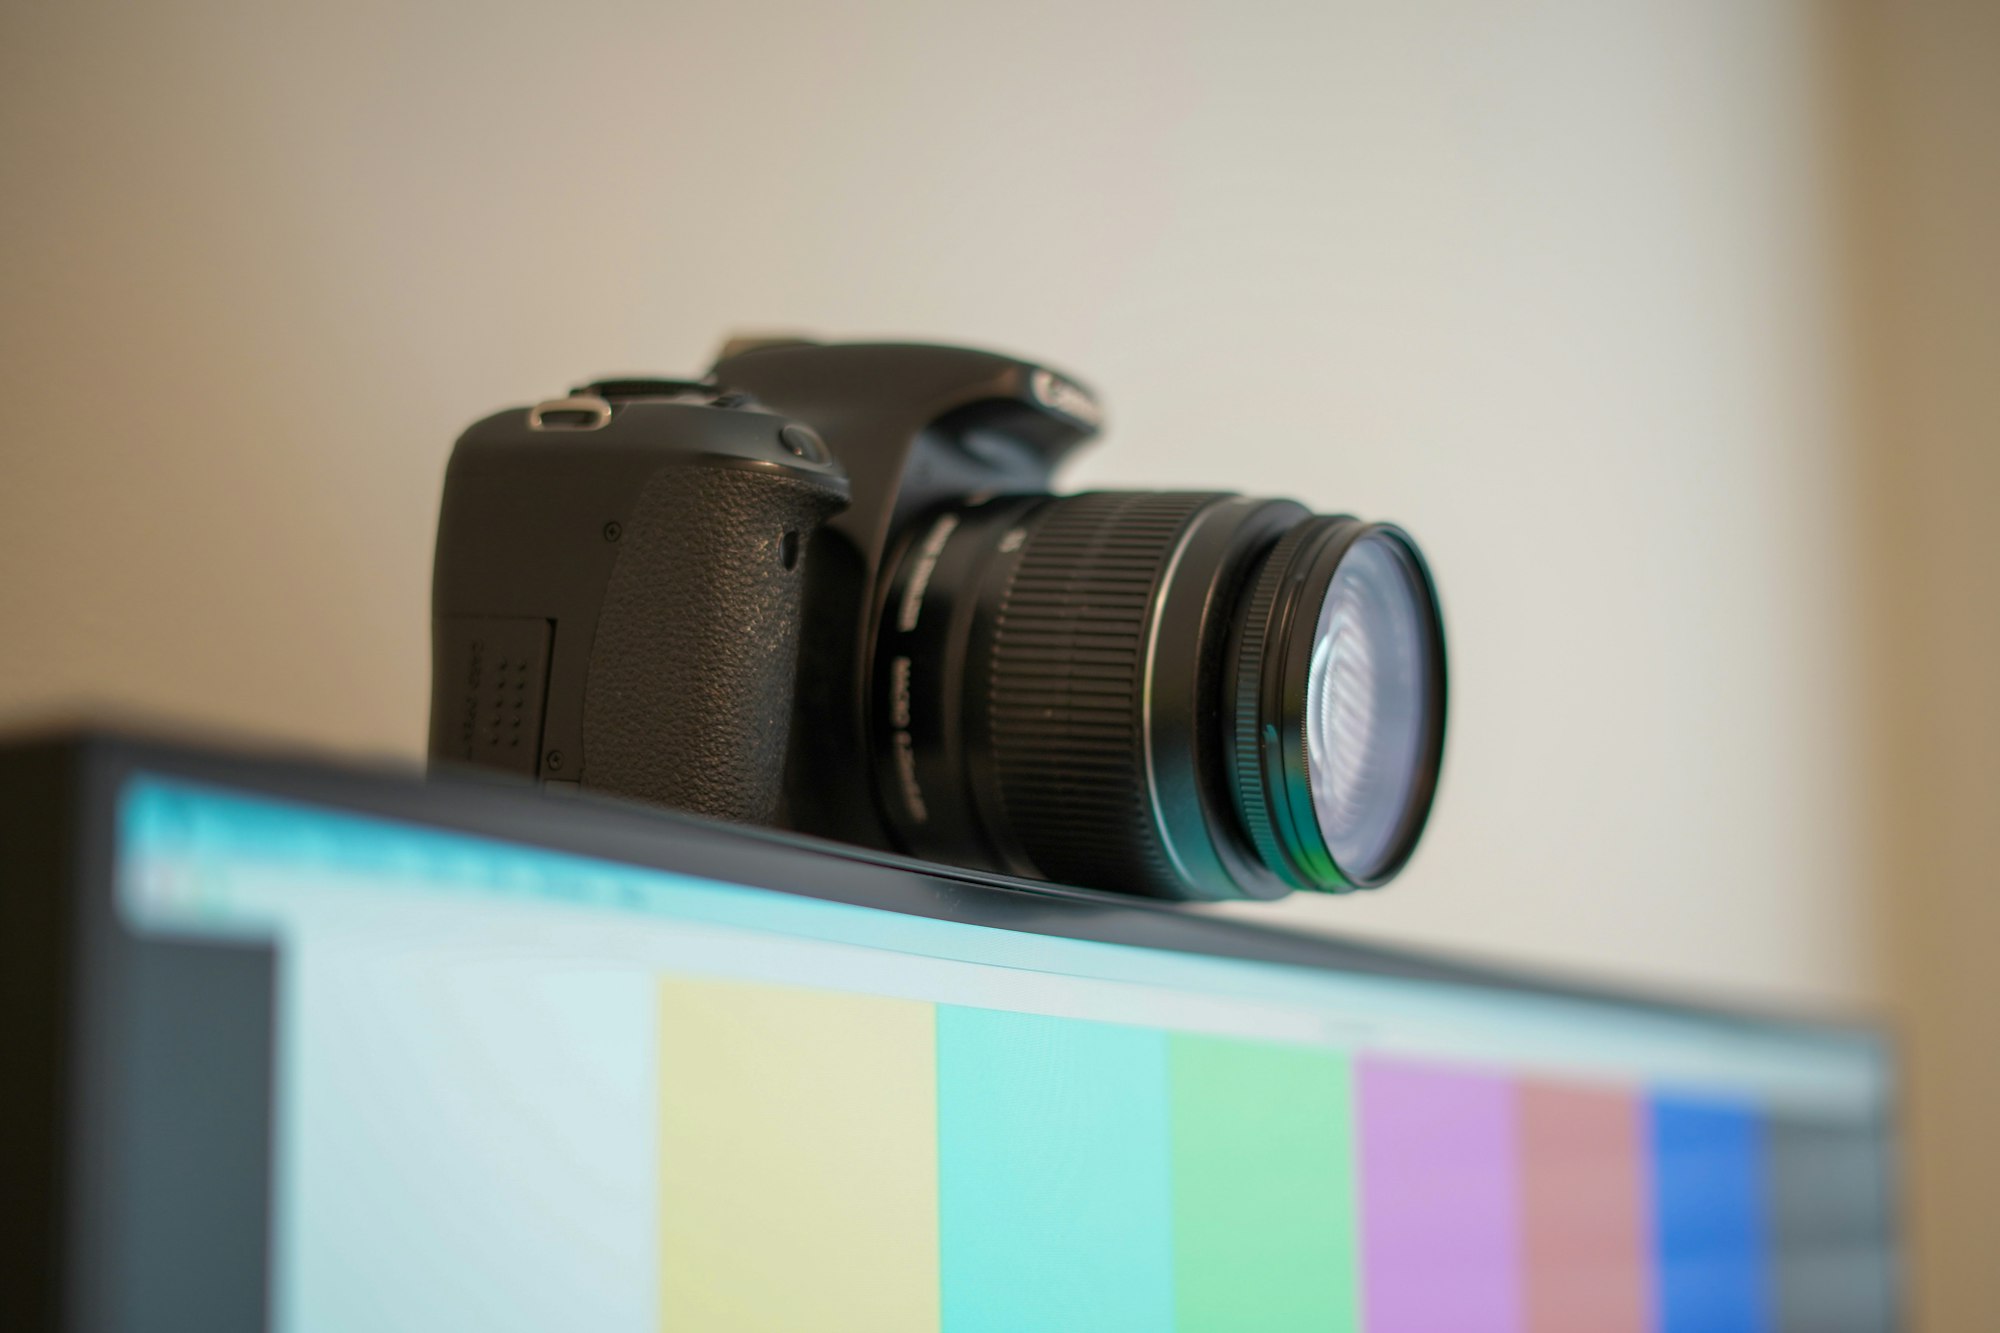 Canon EOS Webcam with M1 MacBook Pro